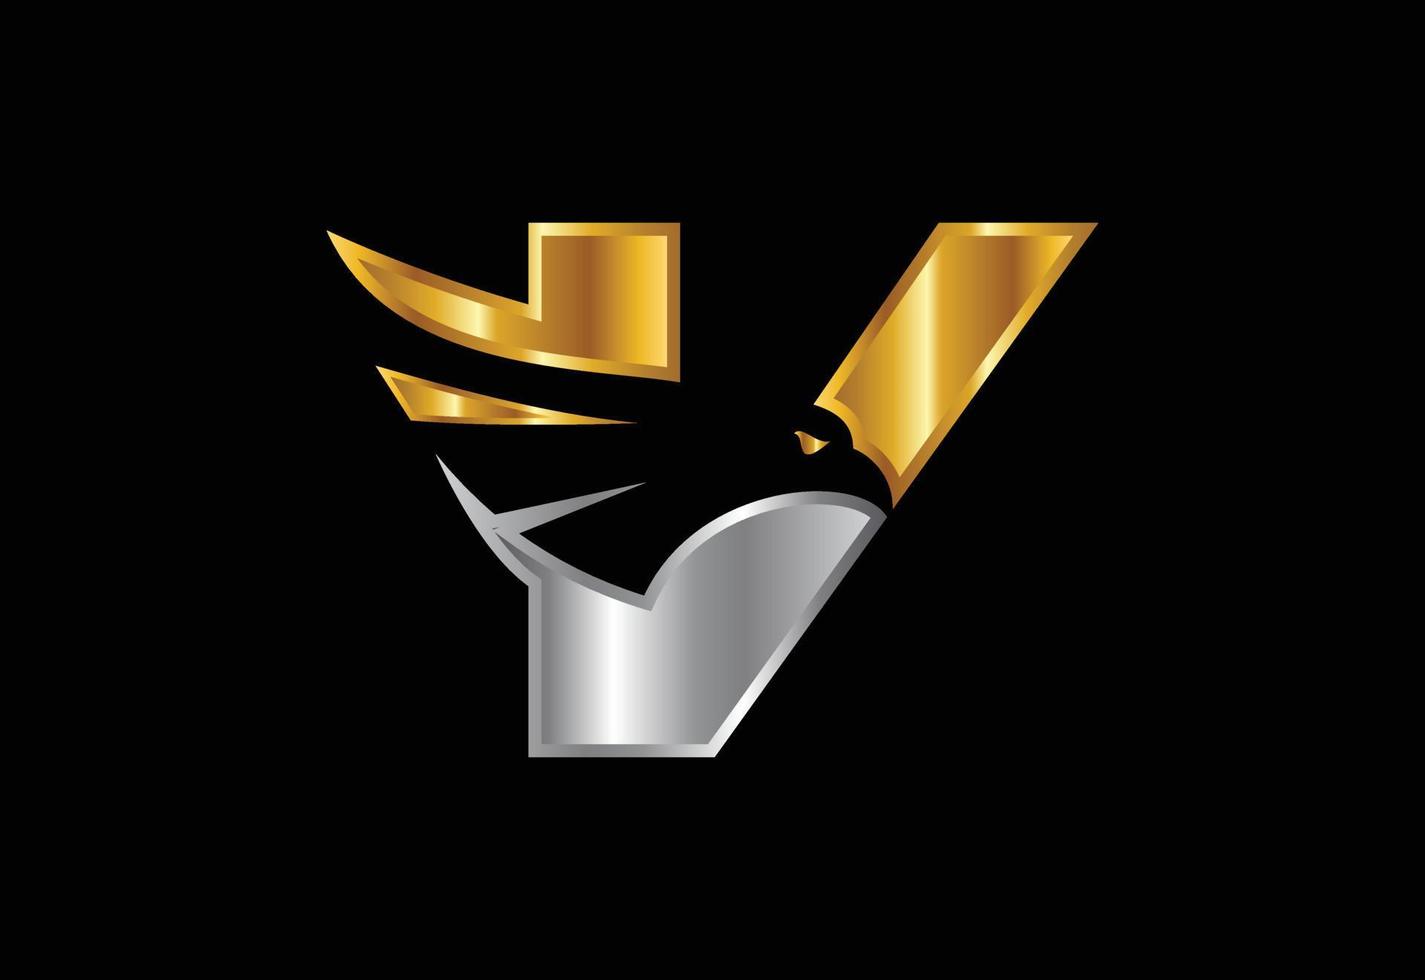 Initial V monogram letter with Eagle head negative space symbol. Creative Eagle head vector design